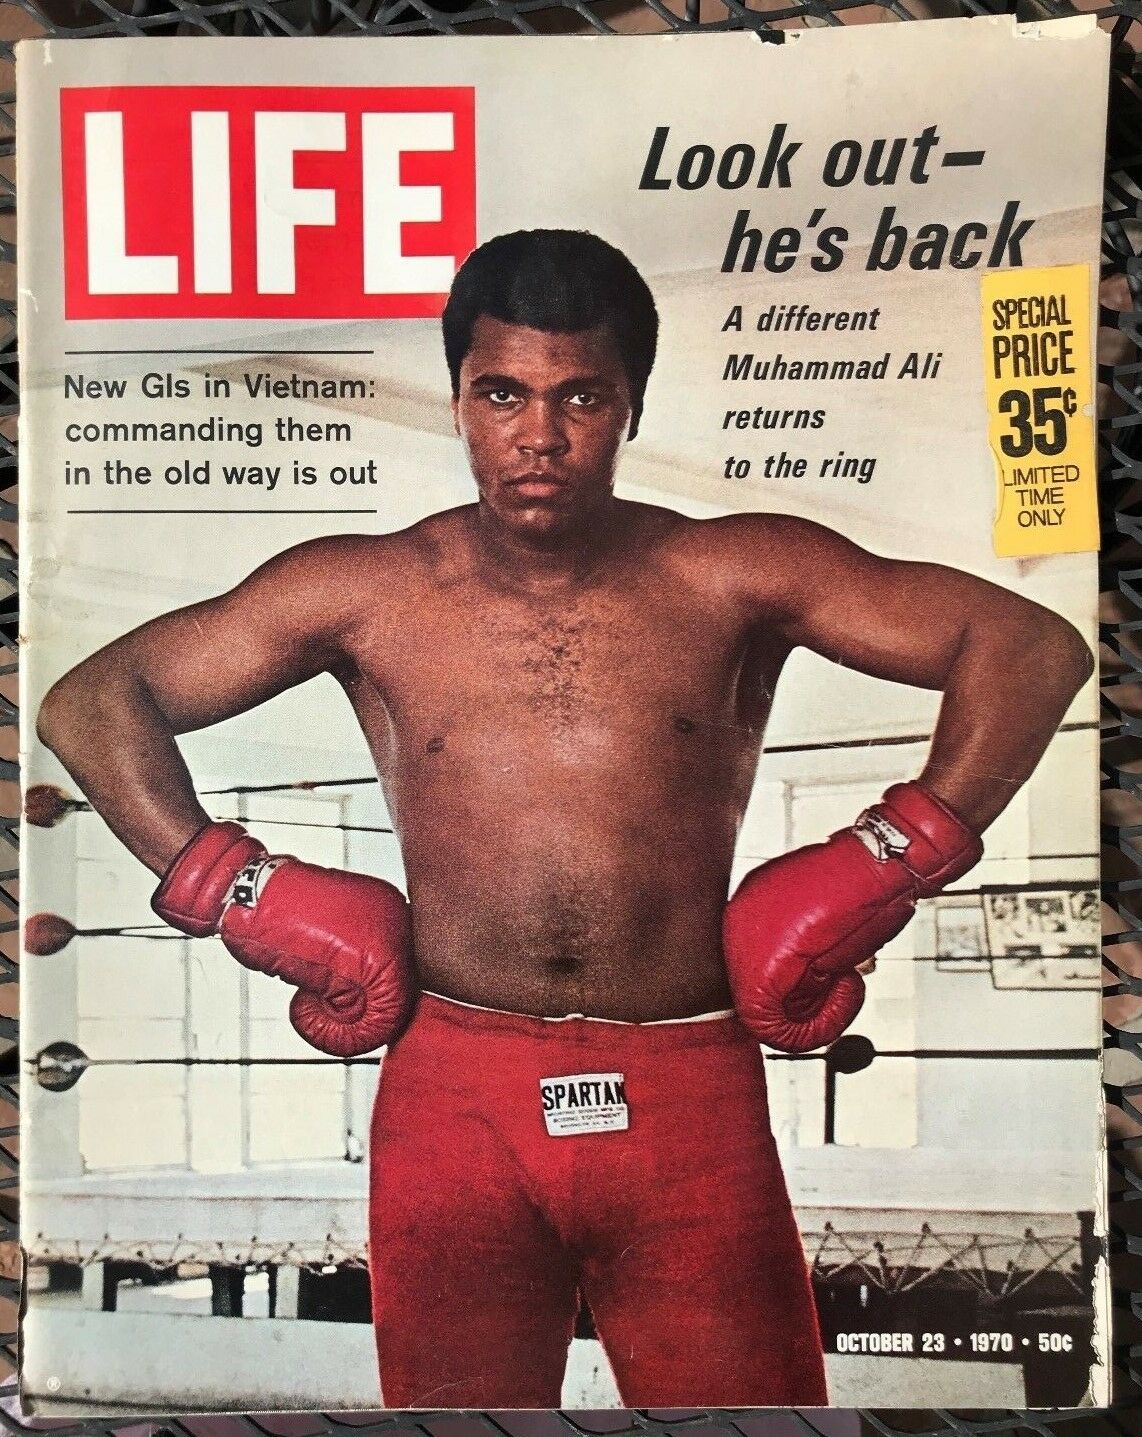 LIFE Magazine - October 23, 1970